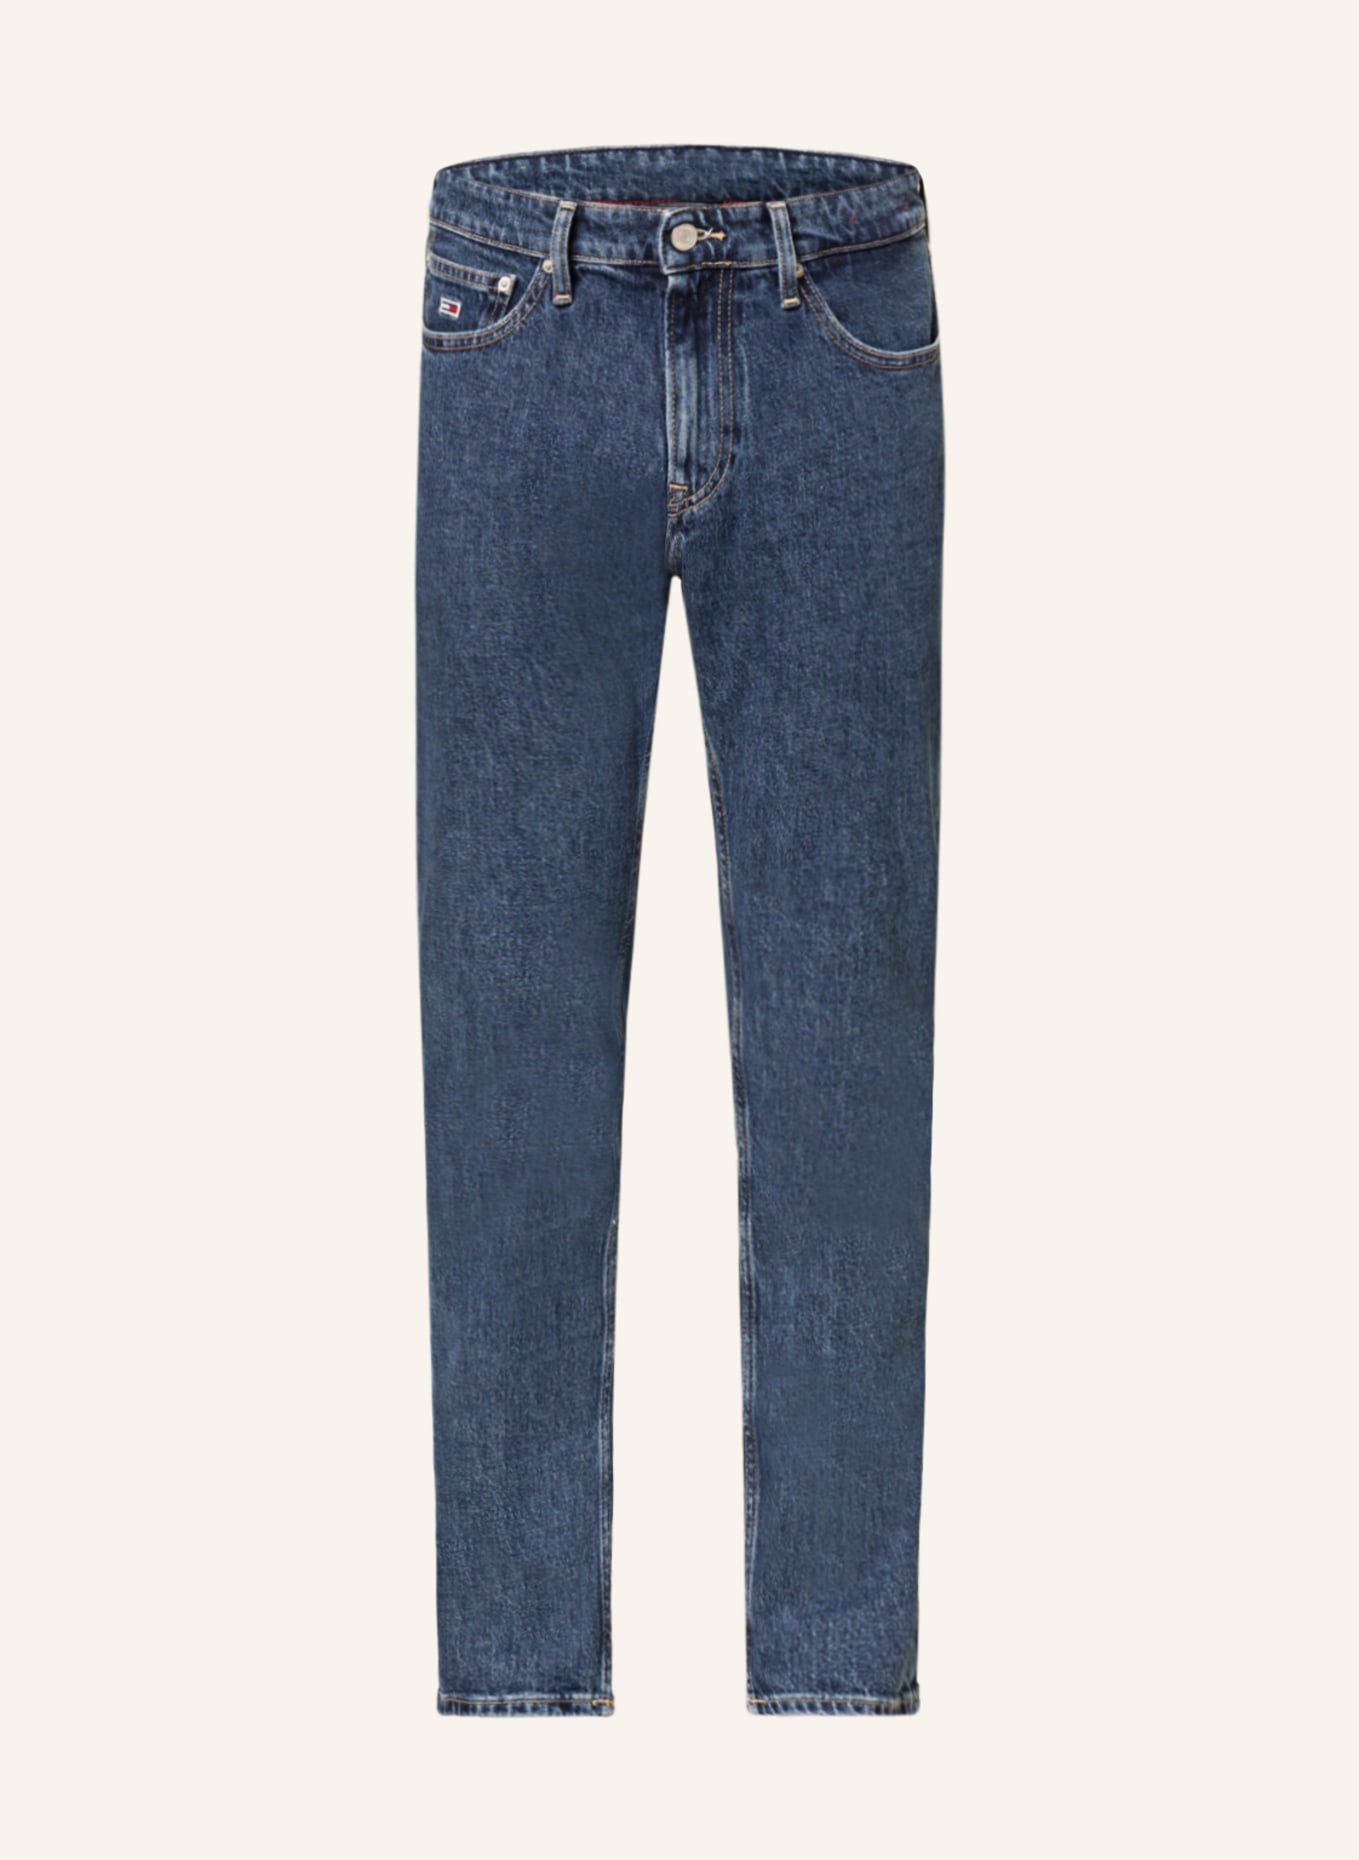 TOMMY JEANS Jeans SCANTON Slim Fit, Farbe: 1A5 Denim Medium (Bild 1)